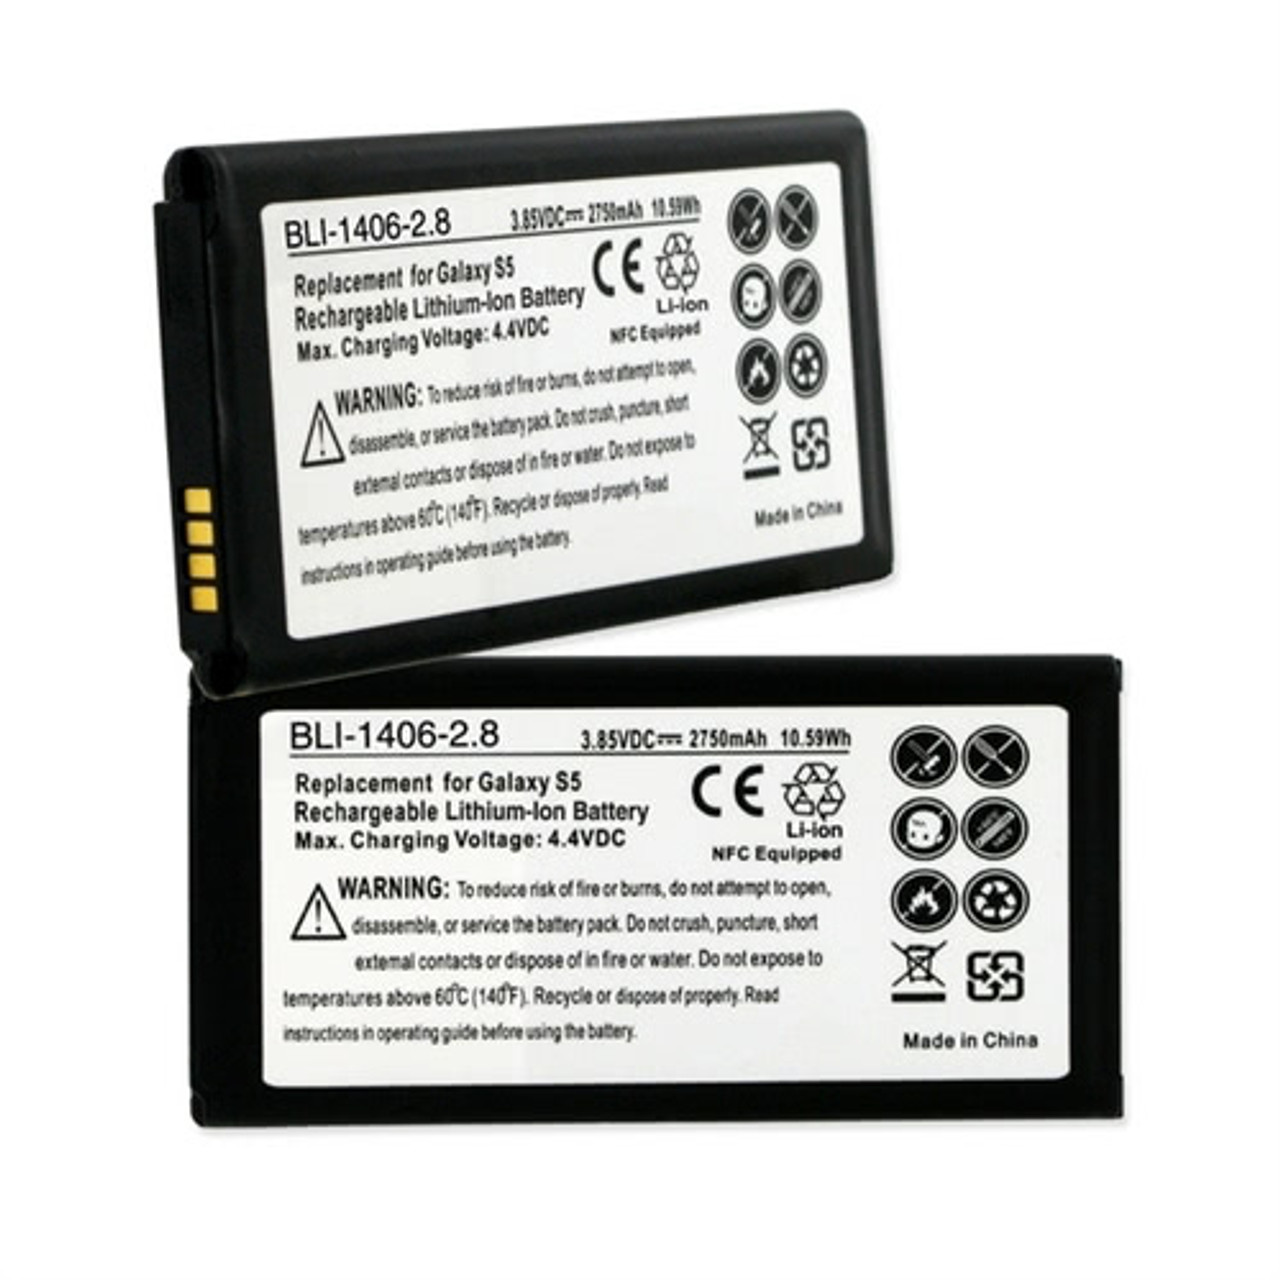 Samsung Galaxy S5 Battery also fits SM-G900V, SM-G900R7, SM-G900T